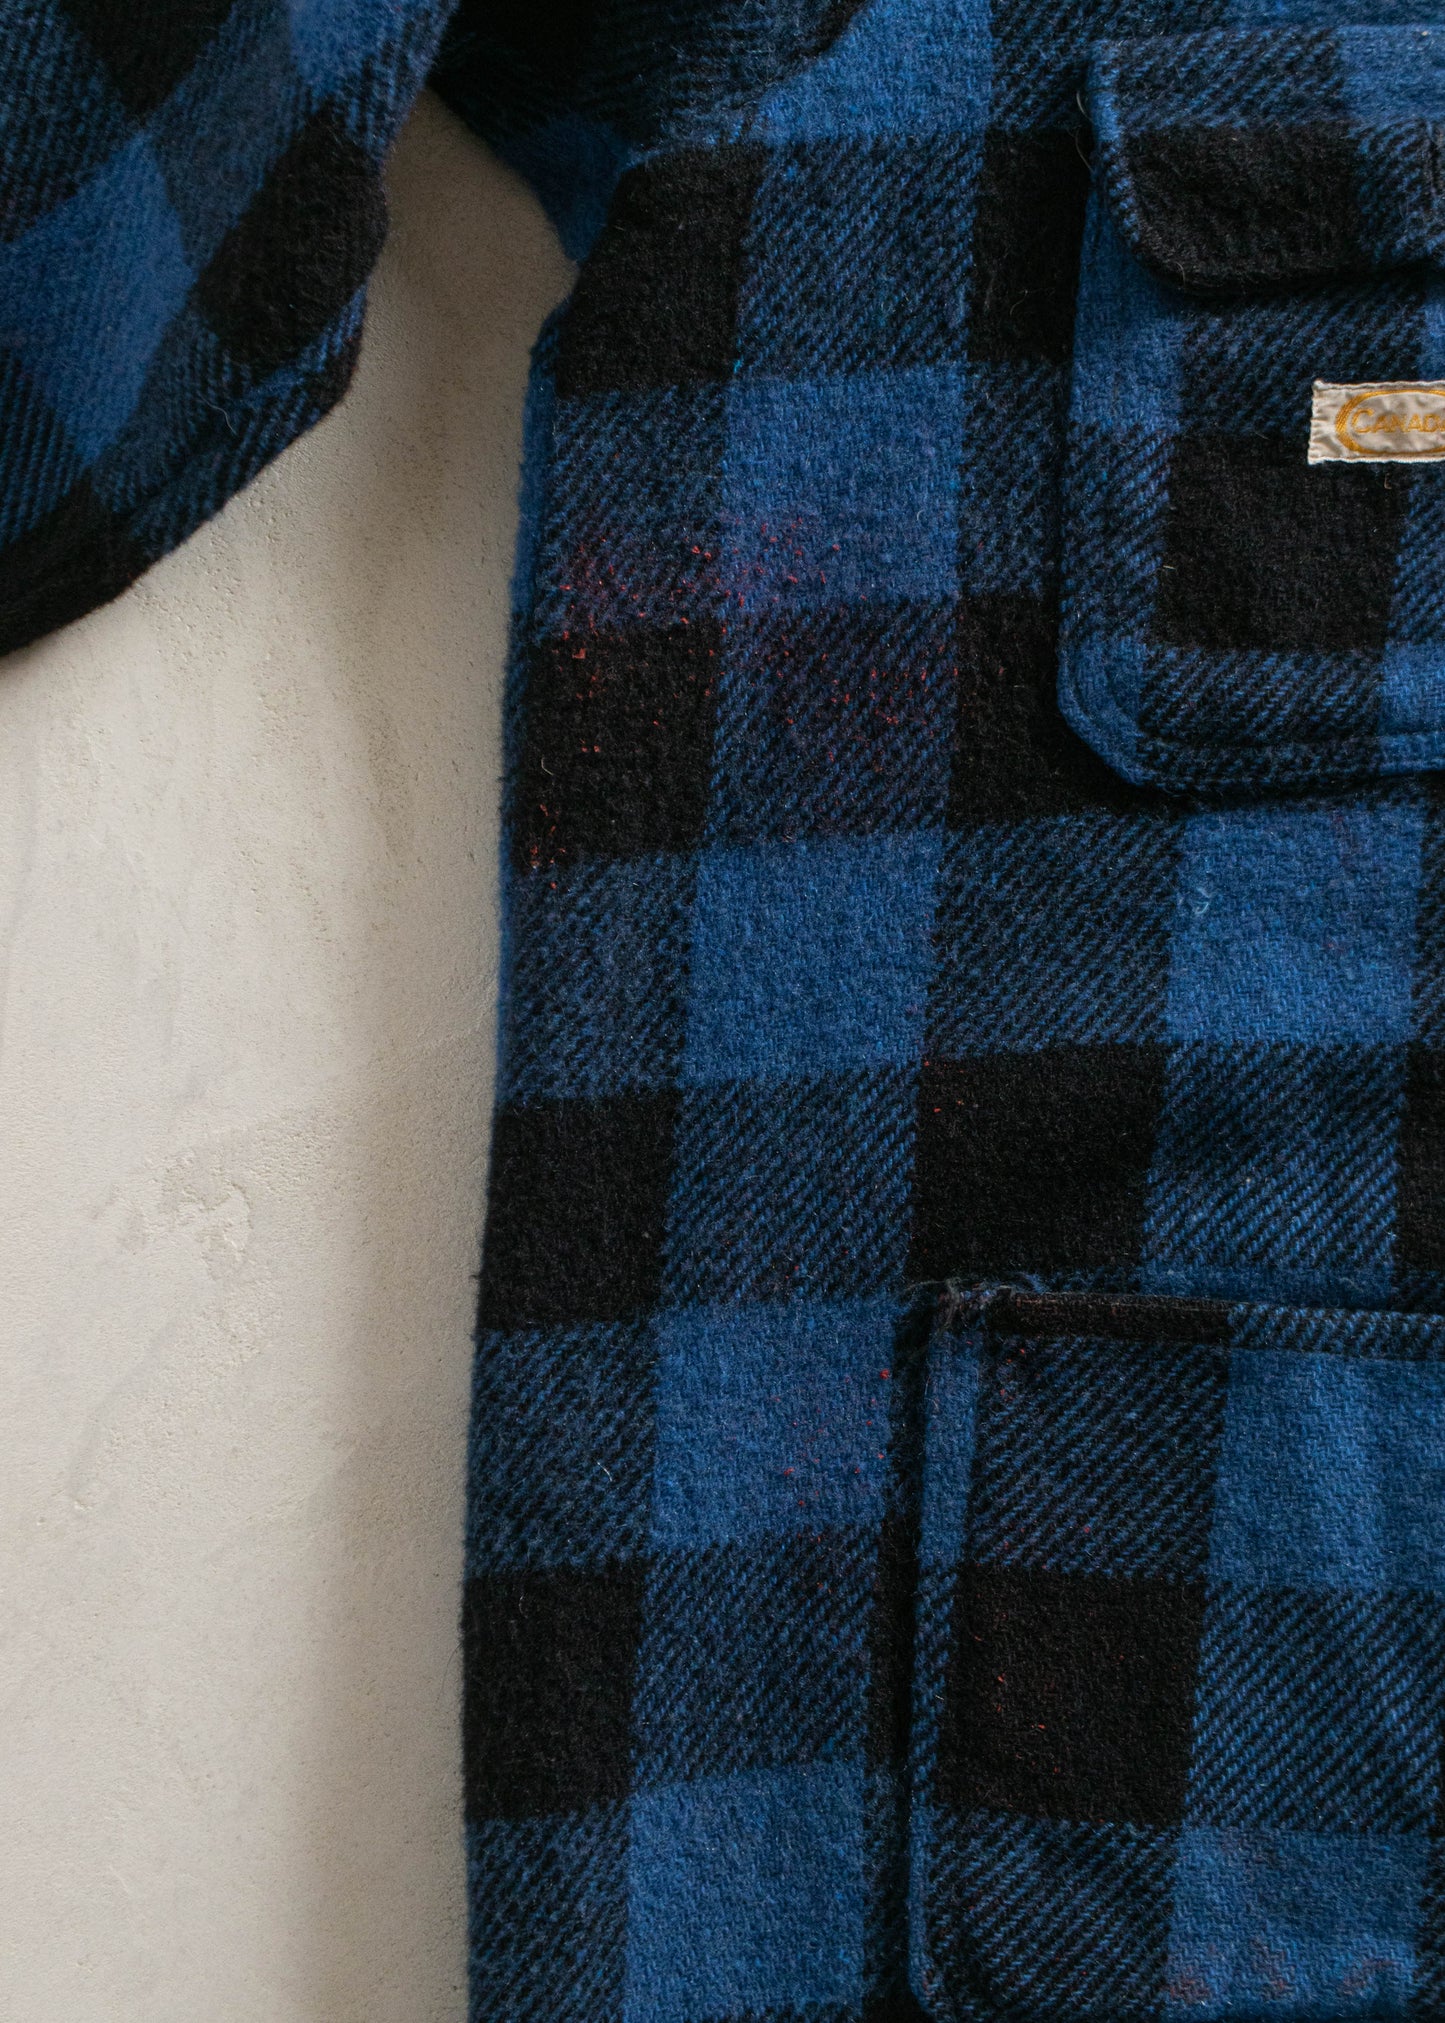 1980s Regent Wool Flannel Button Up Shirt Size L/XL